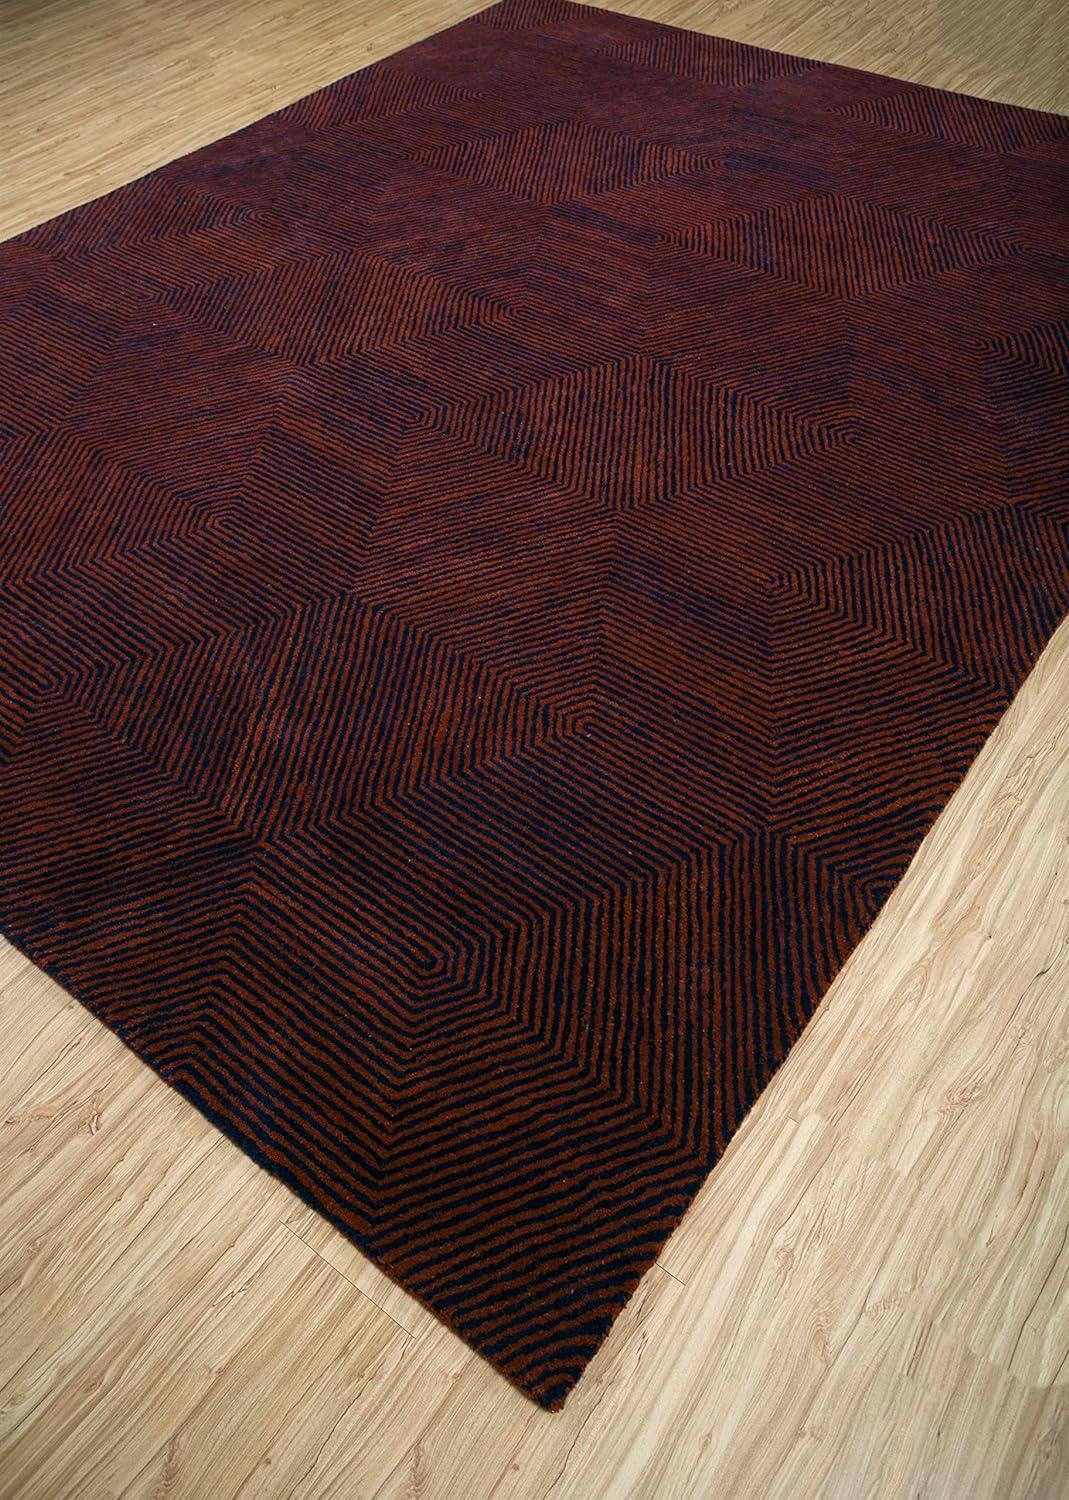 Red Wool Handmade Area Rug - Durable Non-Slip Indoor Use | Wool Handmade Tufted Geometric Lightweight Carpet (Red & Orange, 5x8 Feet)